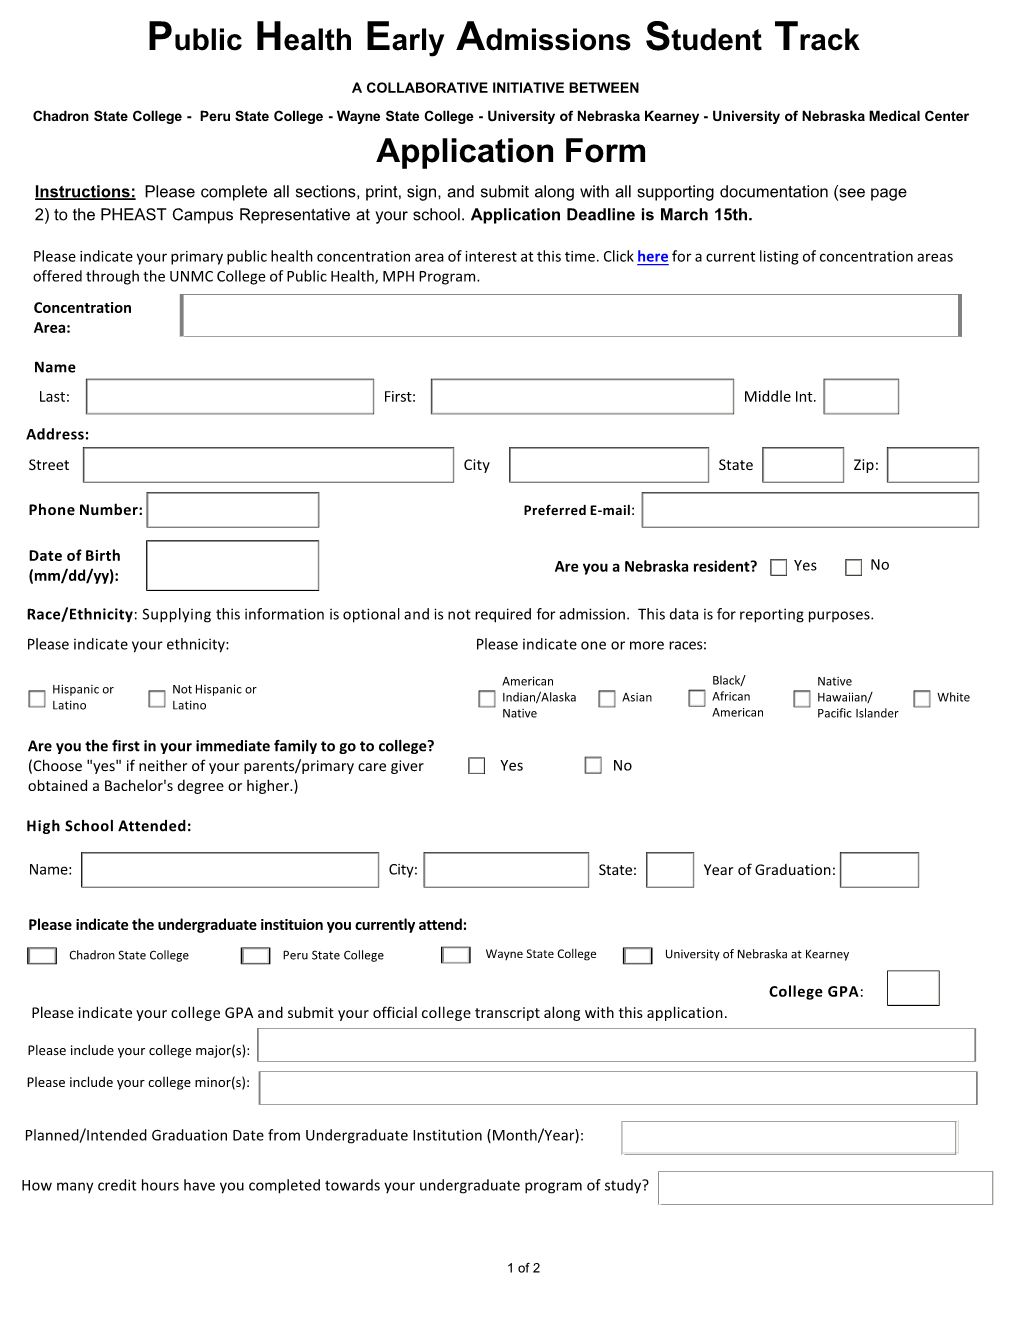 PHEAST Application Form